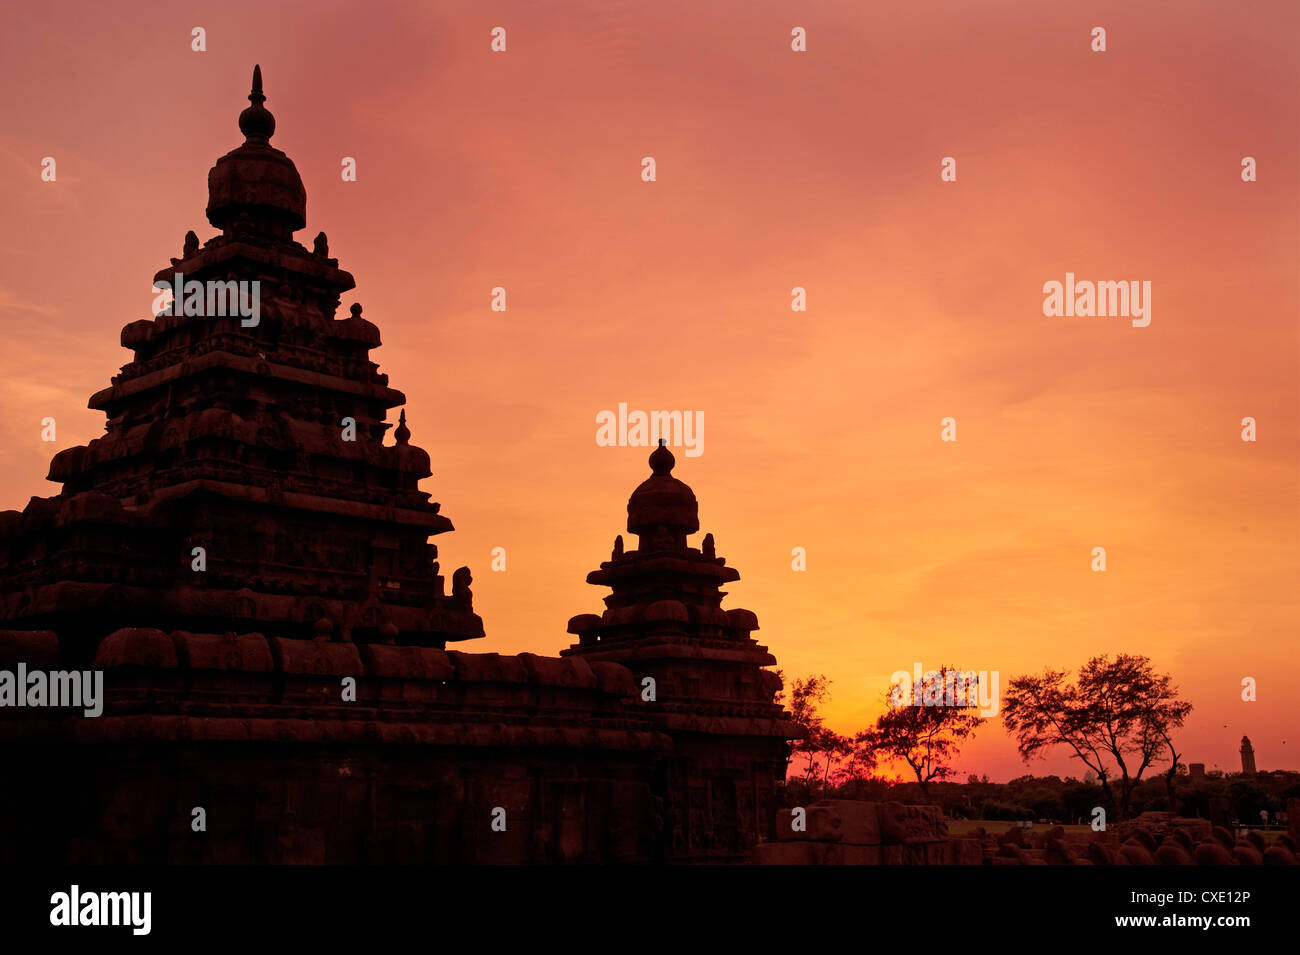 The Shore Temple at sunset, Mamallapuram (Mahabalipuram), UNESCO World Heritage Site, Tamil Nadu, India, Asia Stock Photo